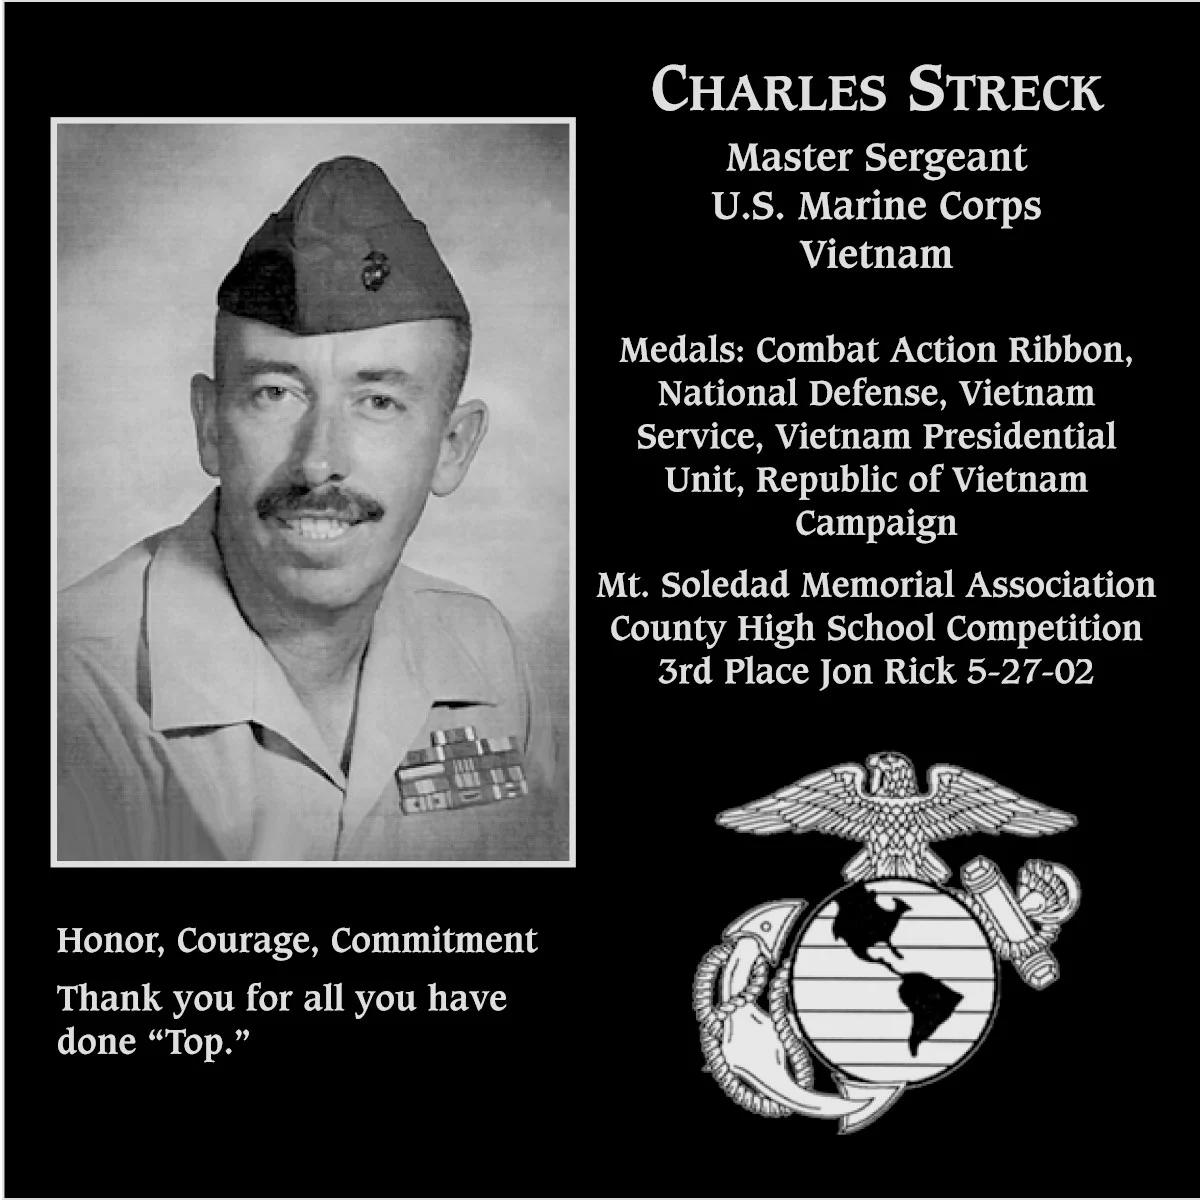 Charles Streck